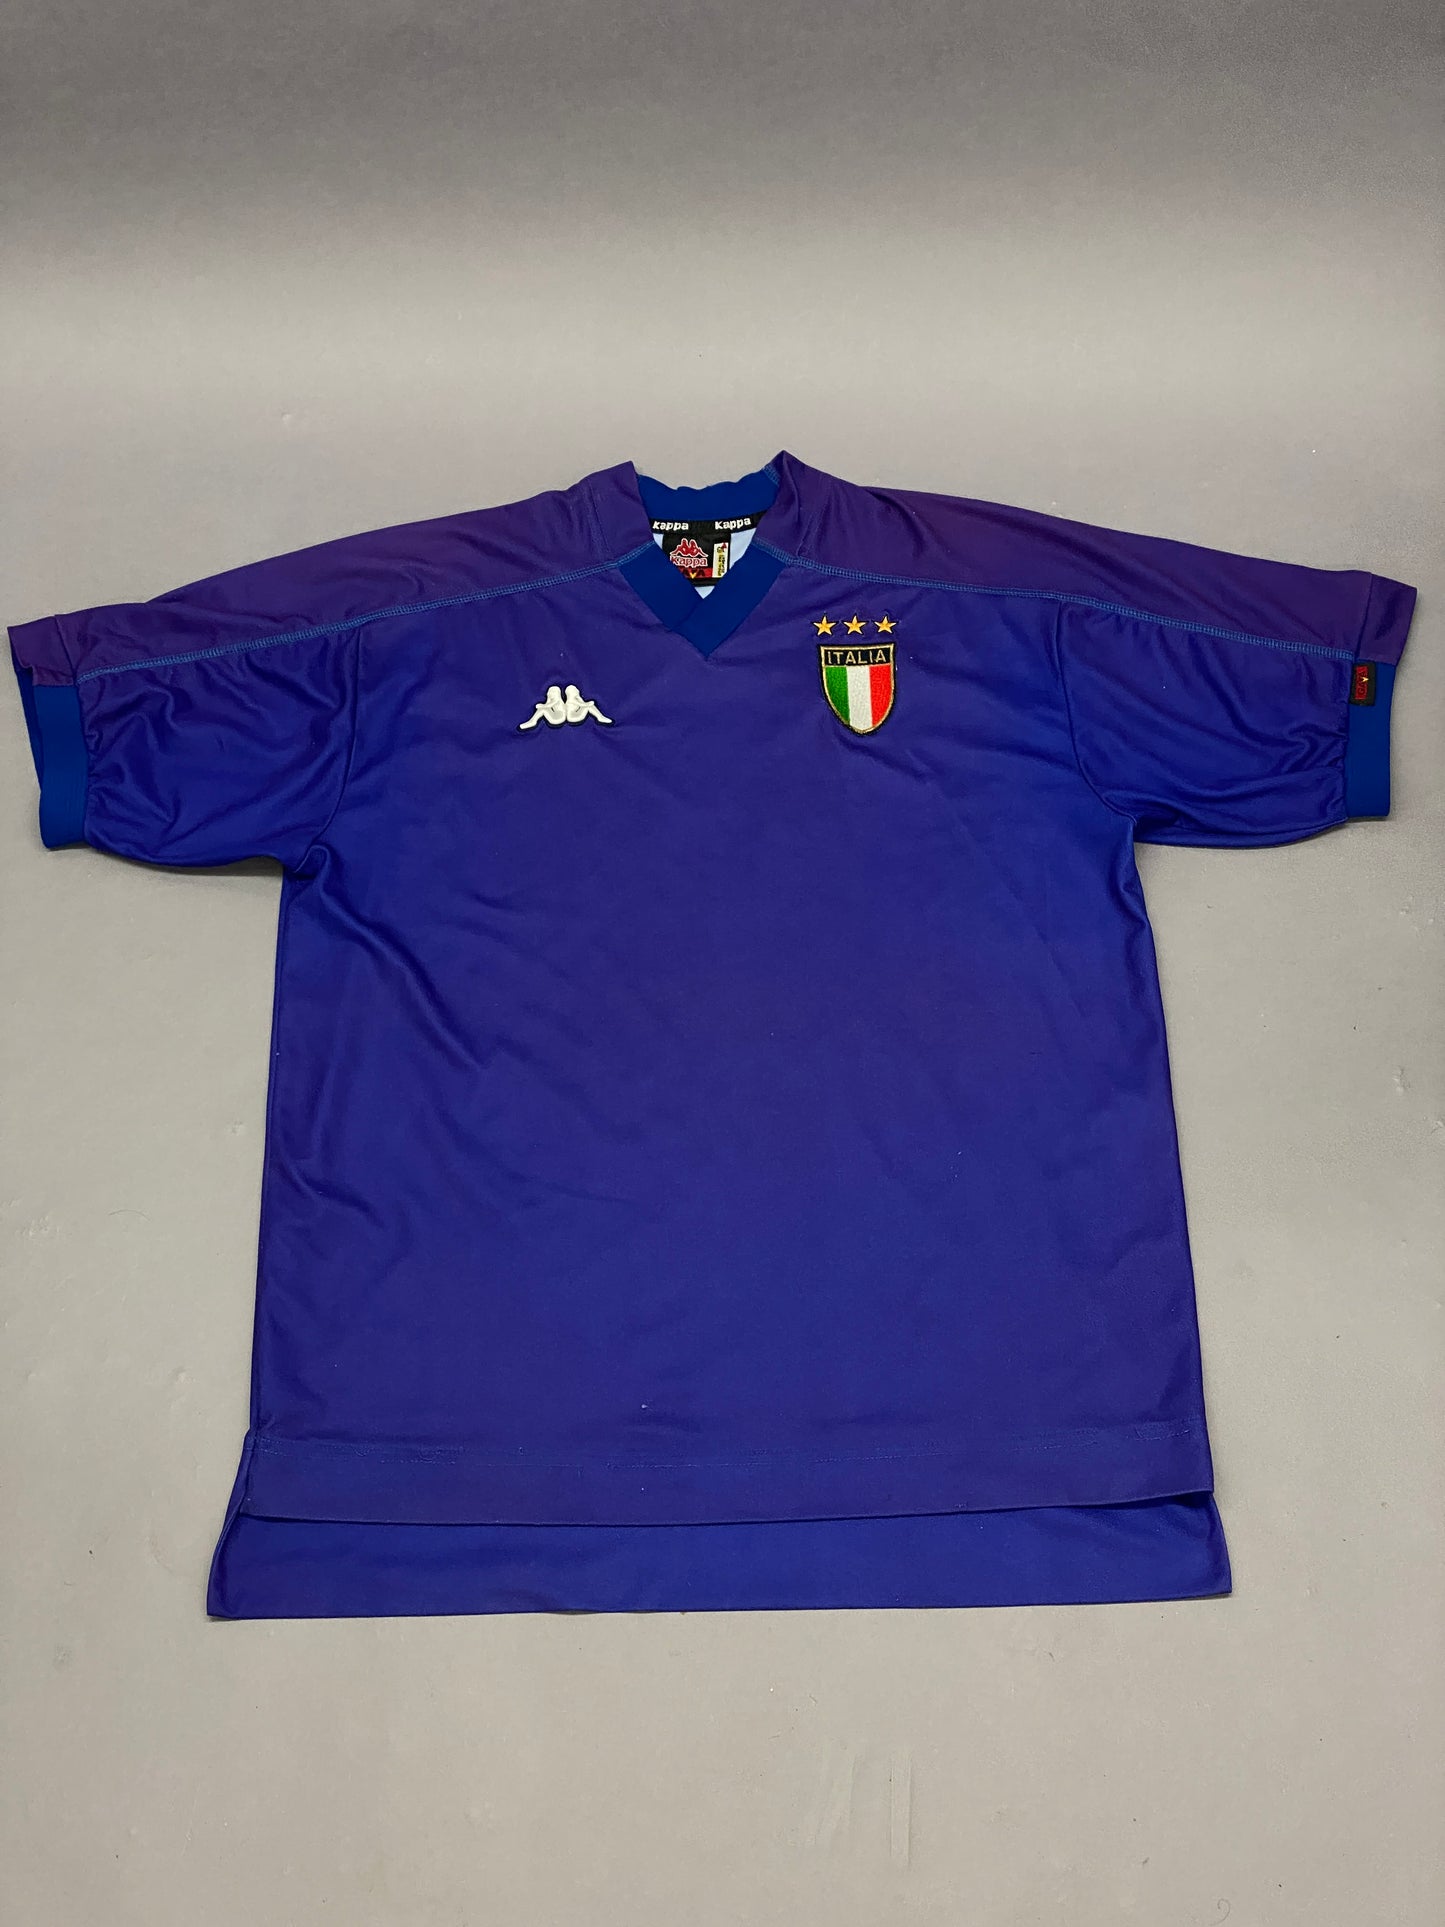 Italy Kappa 1999 Vintage Jersey